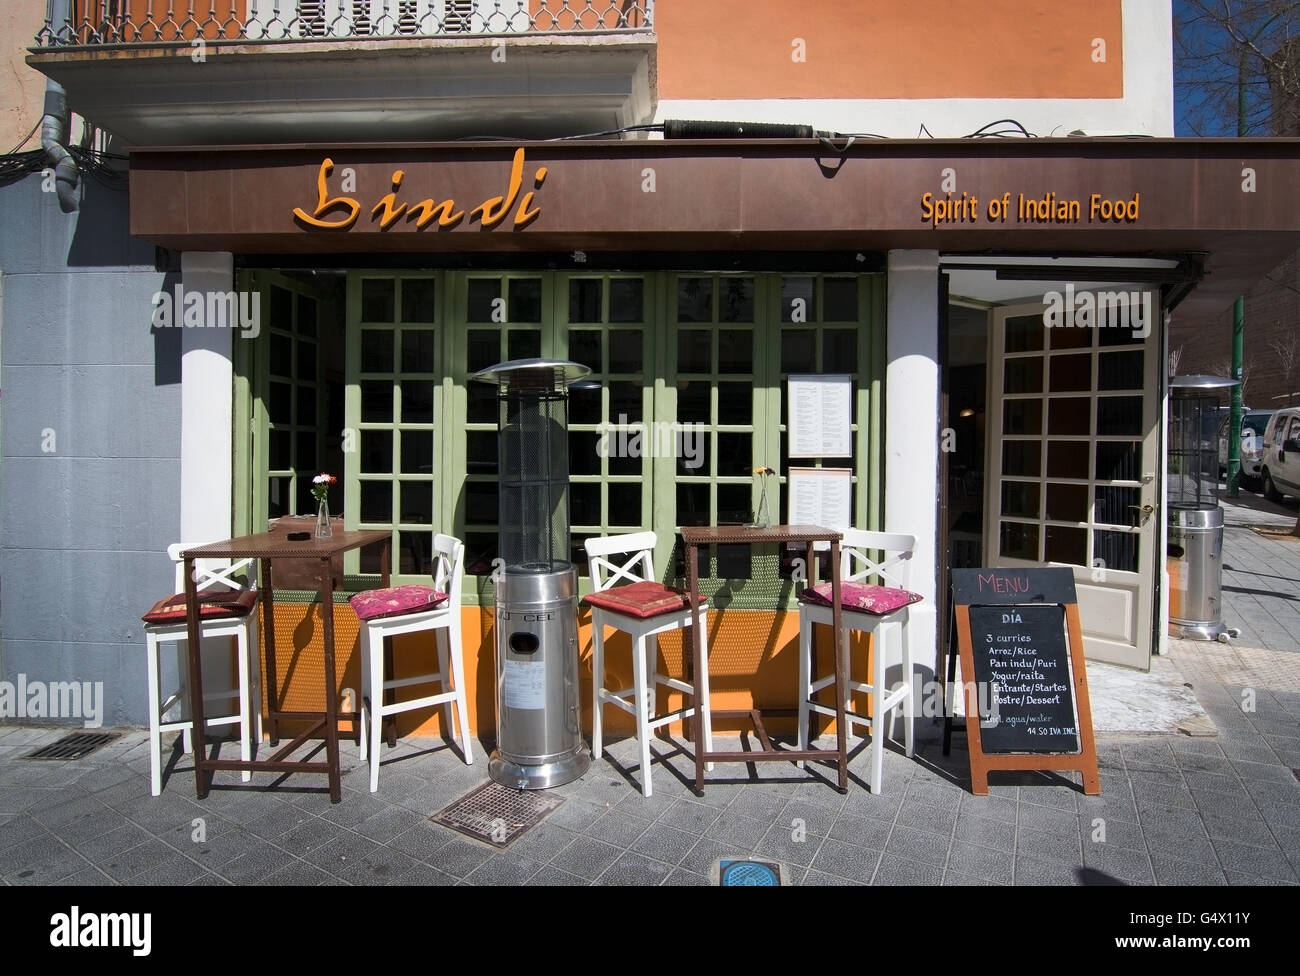 Bindi restaurant front in Santa Catalina, Palma de Mallorca, Balearic islands, Spain on April 13, 2016. Stock Photo